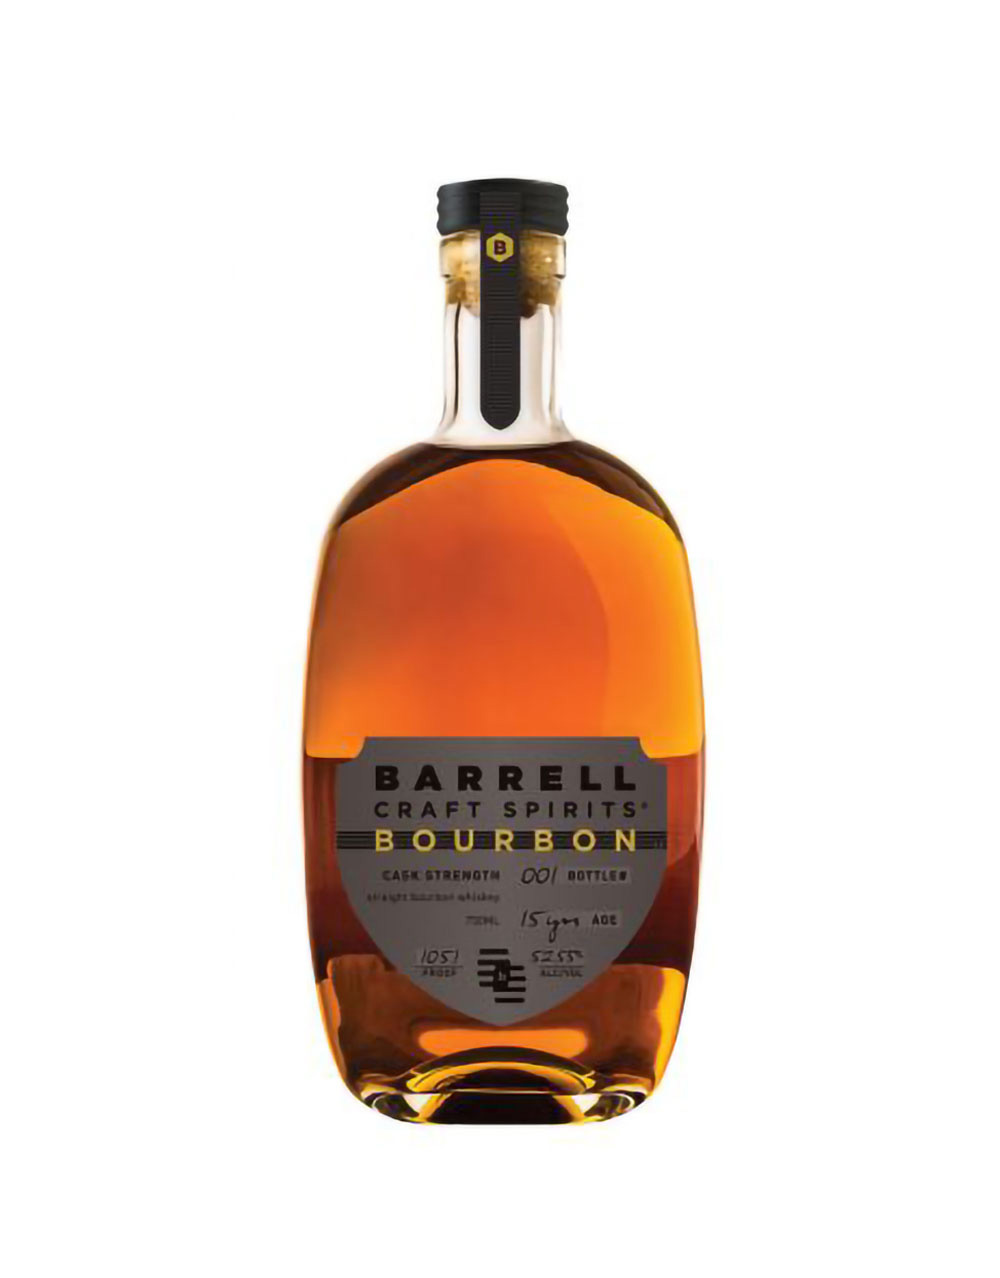 Koval Single Barrel Millet Whiskey